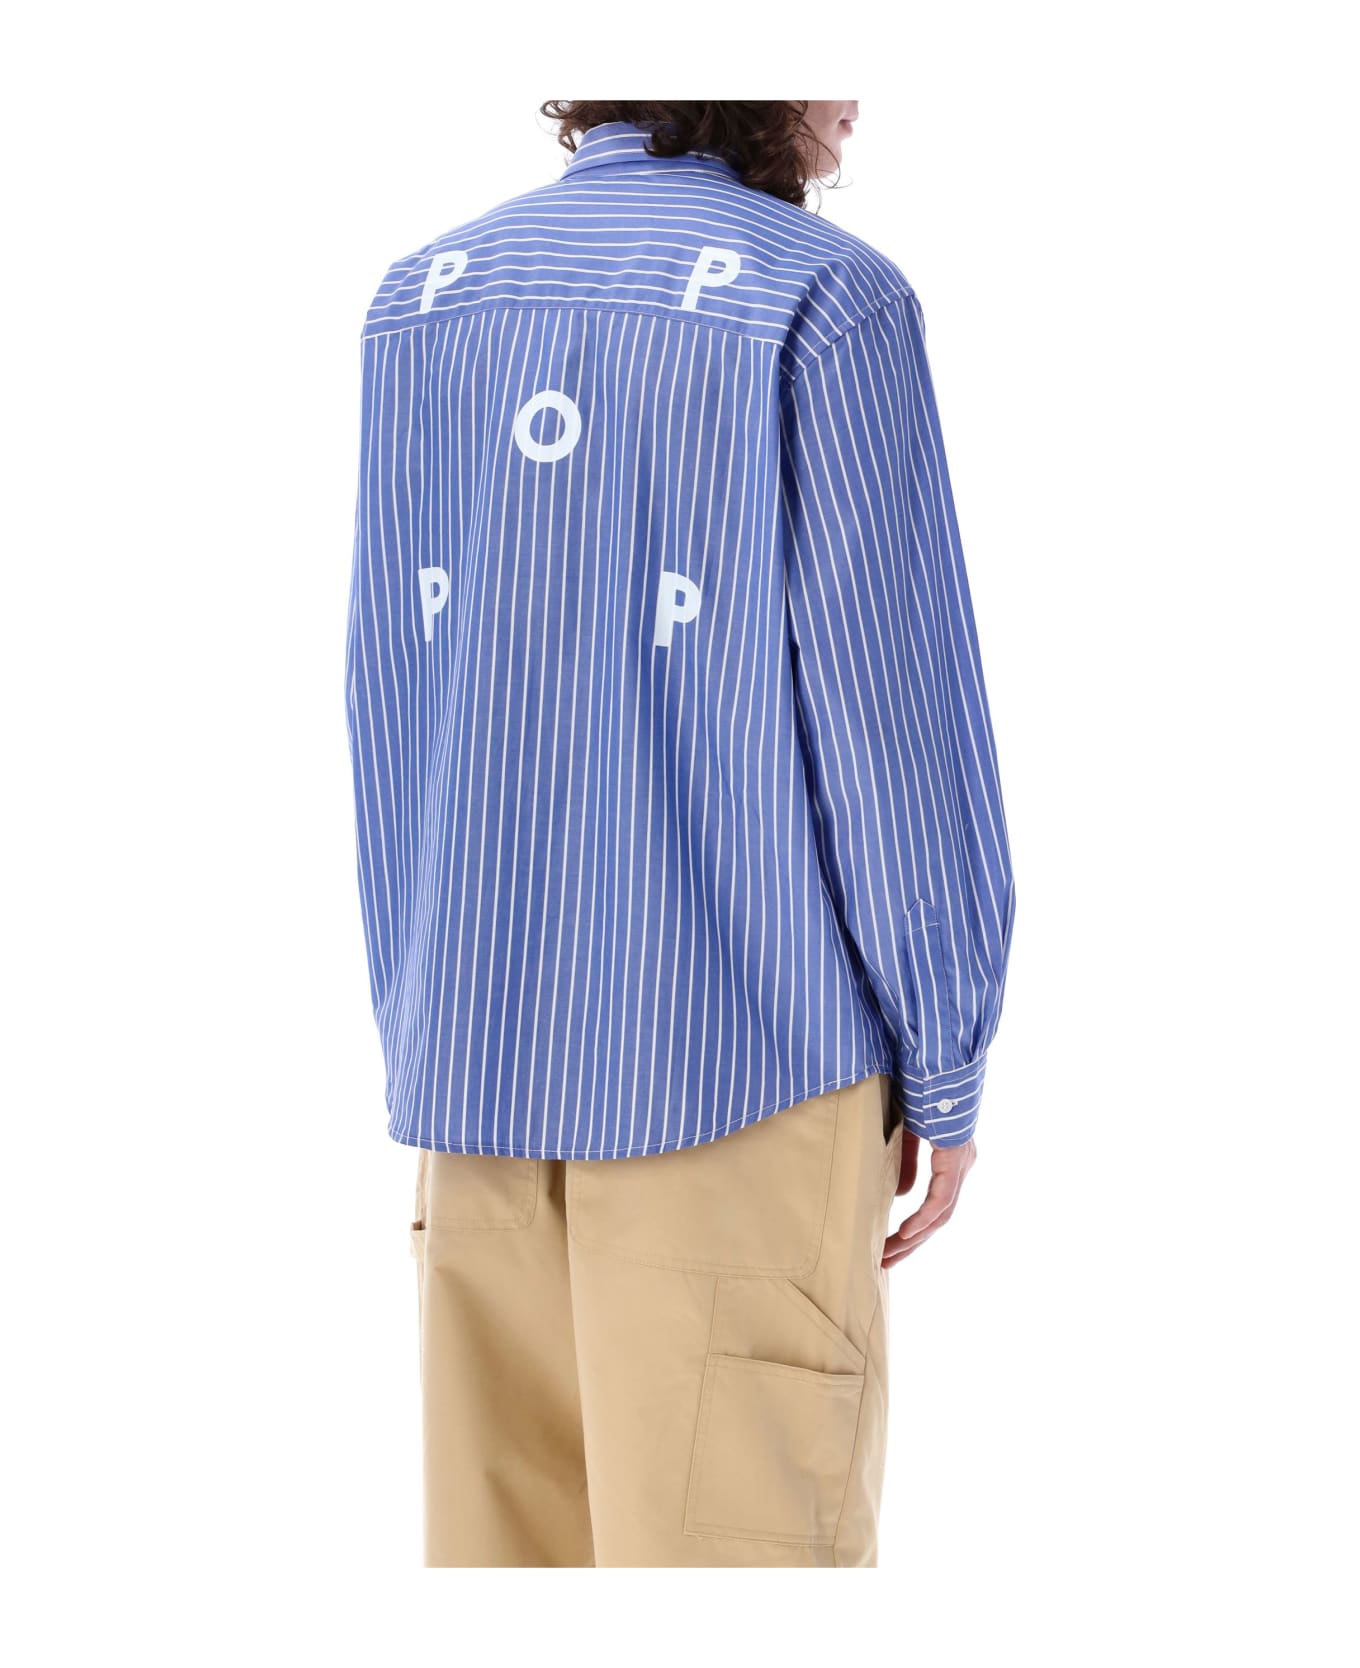 Pop Trading Company Pop Striped Shirt - LIGHT BLUE